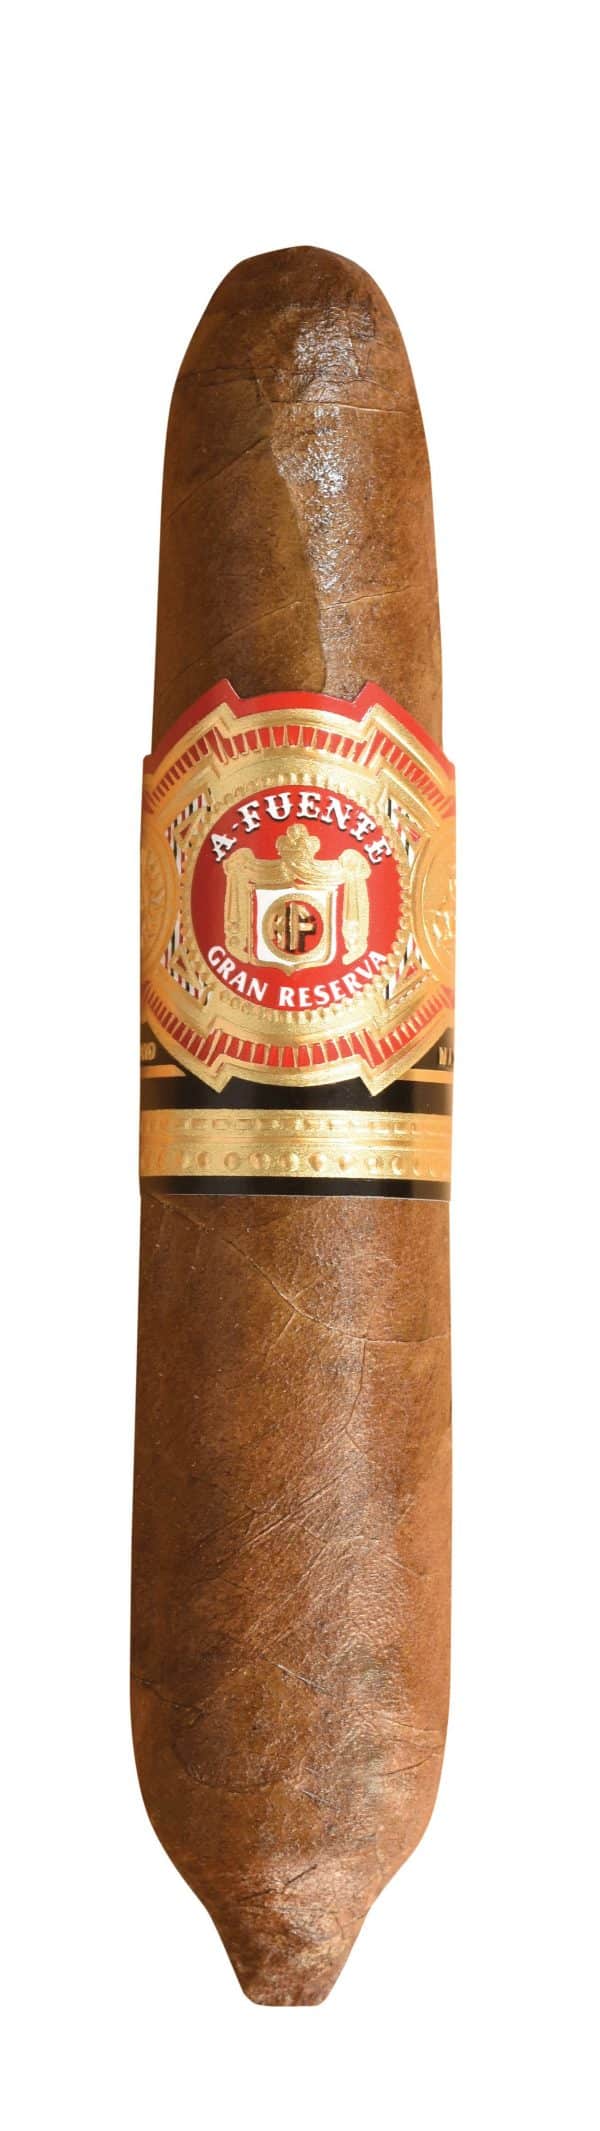 Single Arturo Fuente Hemingway Best Seller cigar